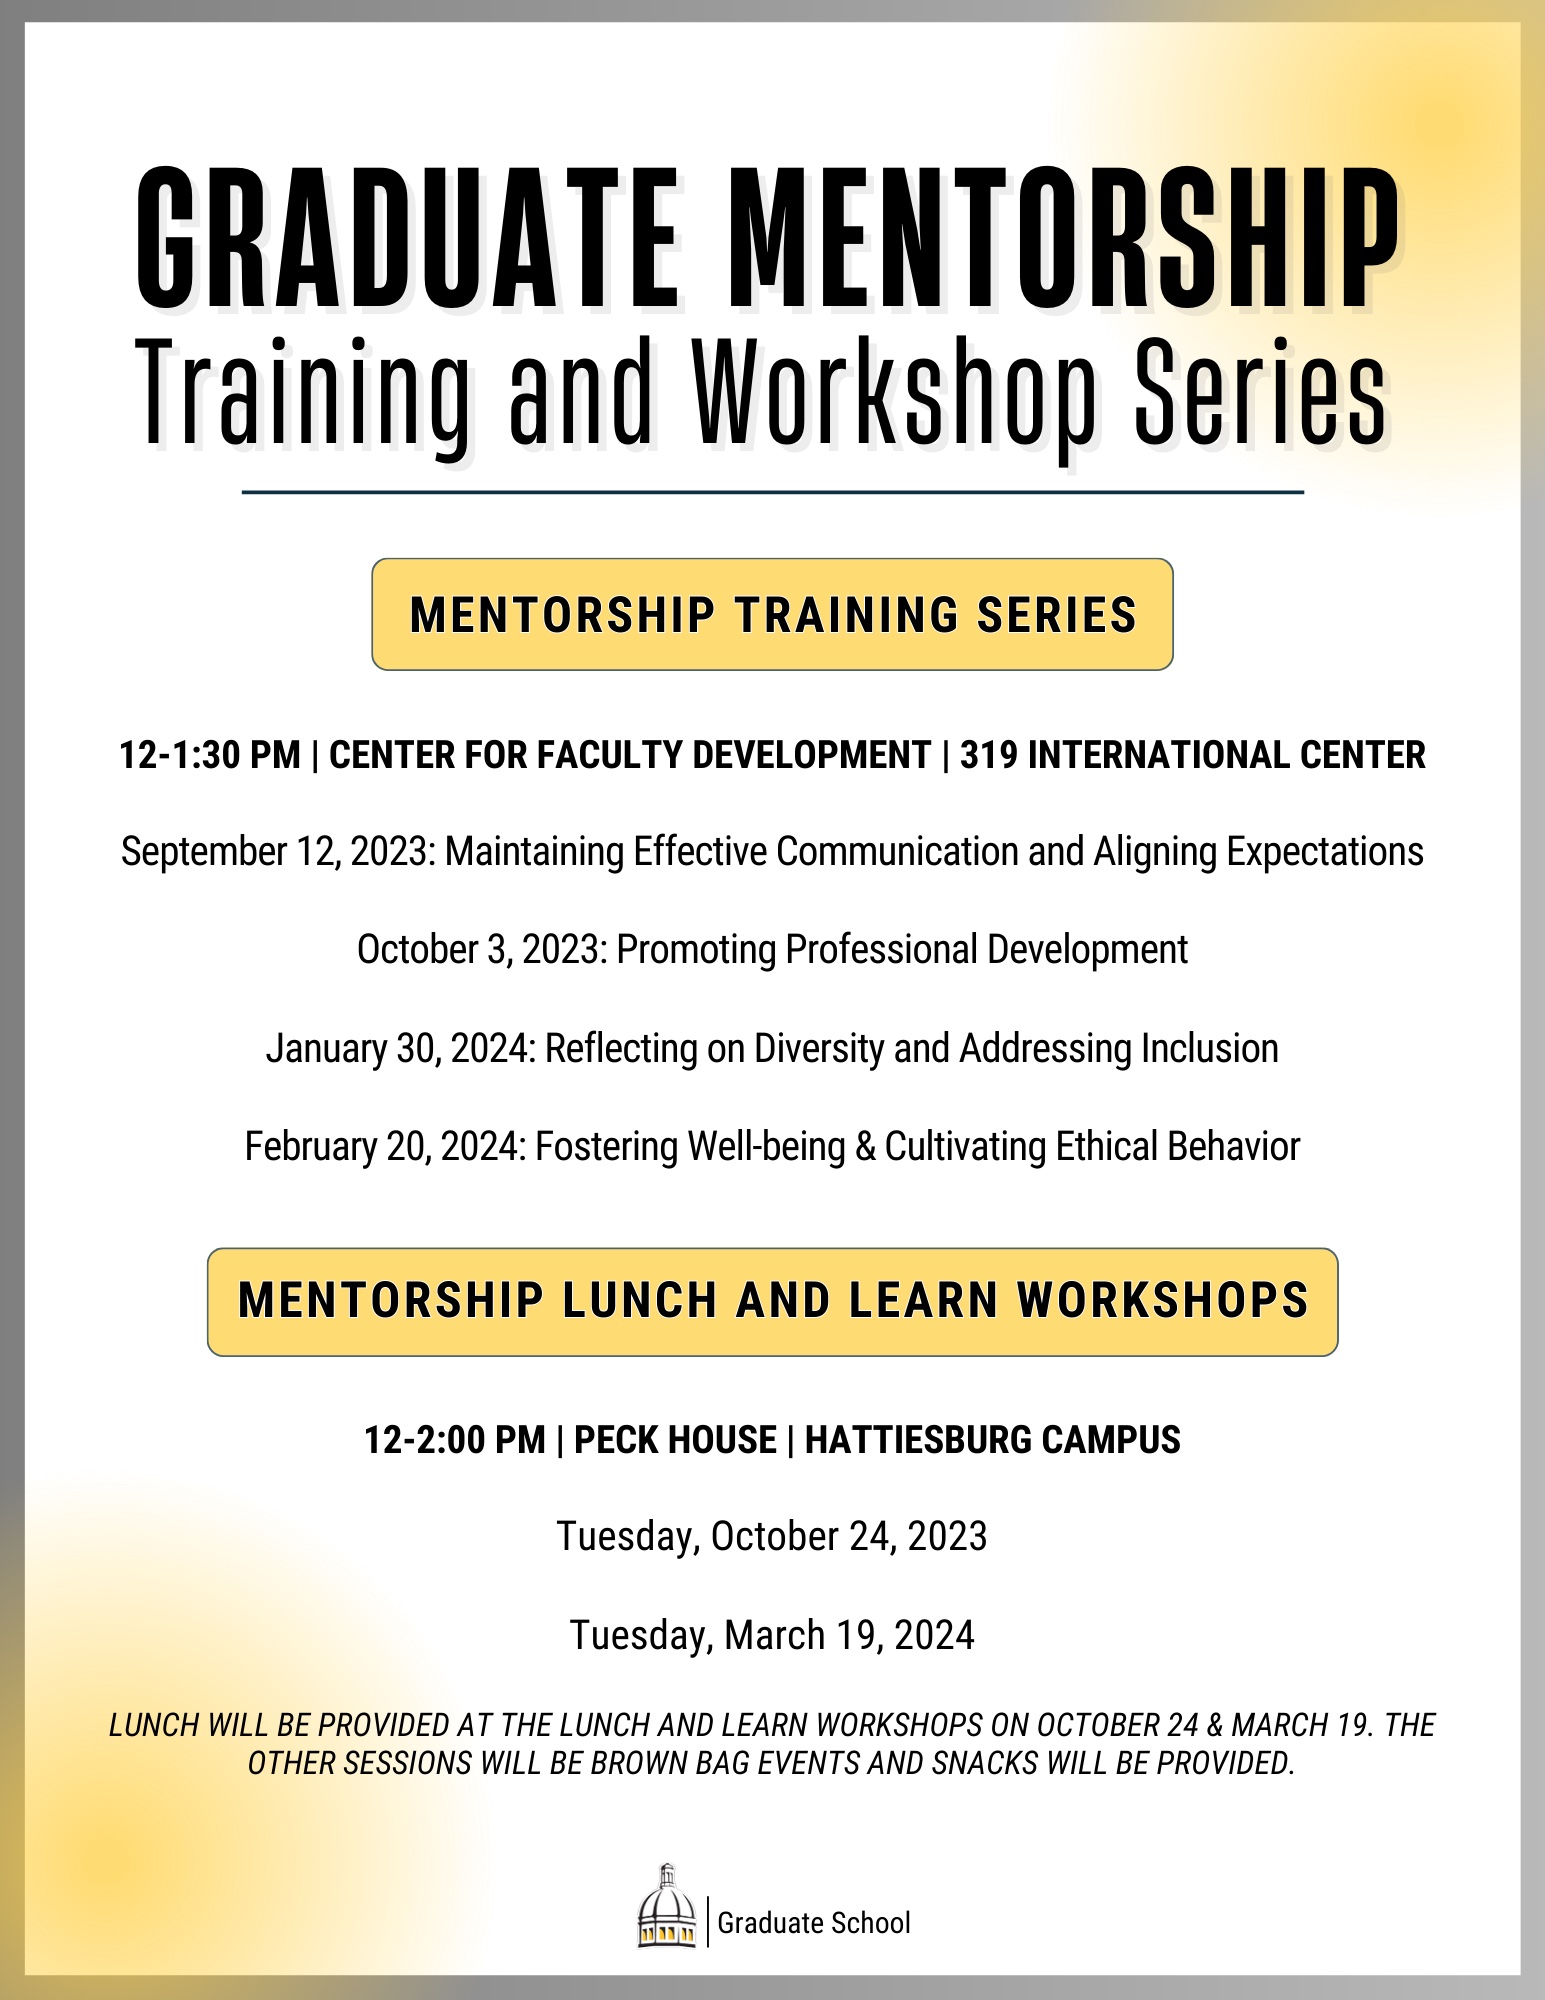 Graduate Mentorship Training and Workshop Series Graphic